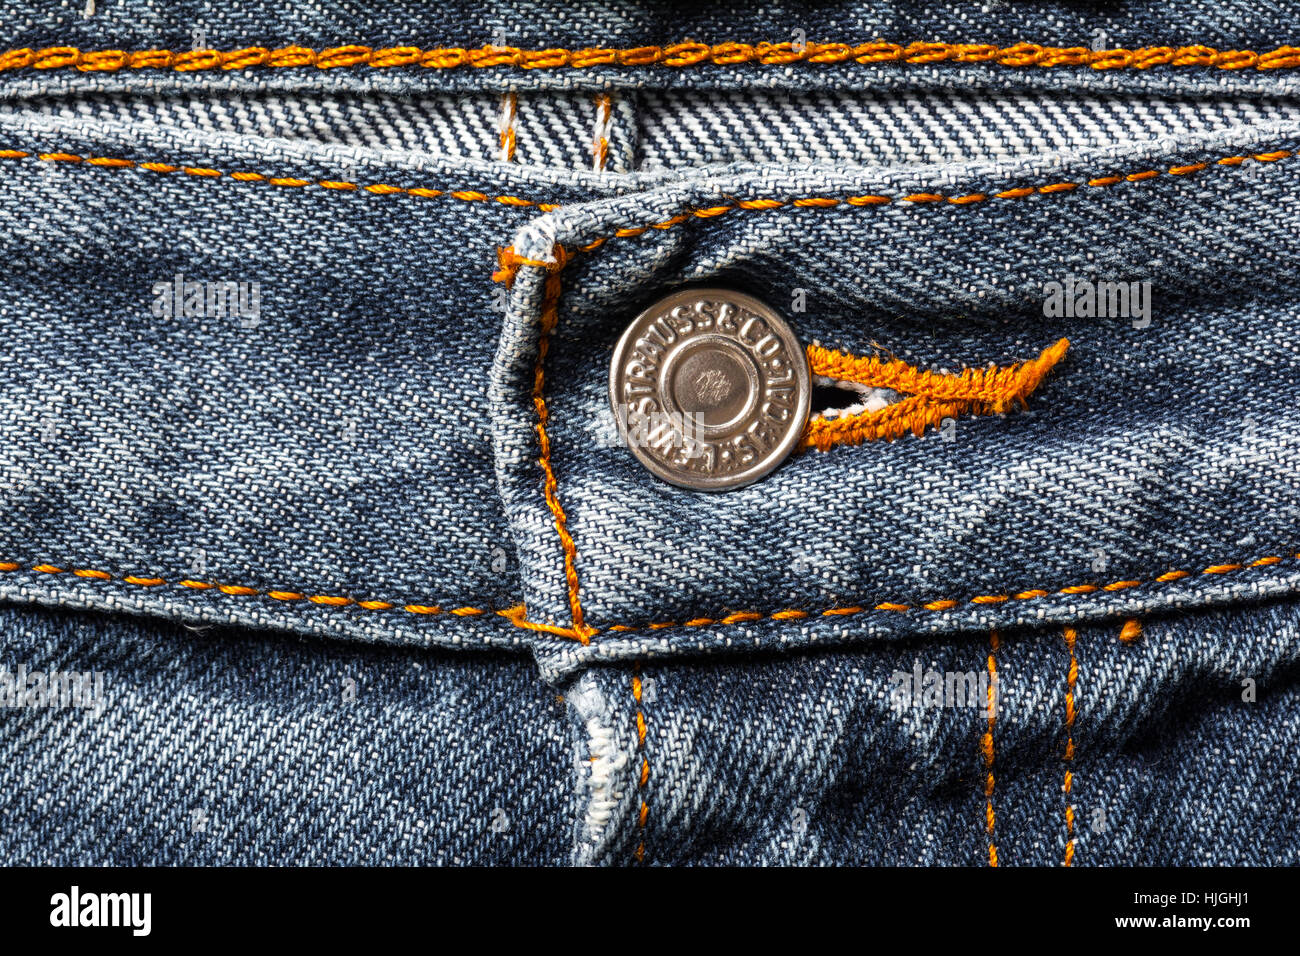 Levis jeans button Stock Photo - Alamy